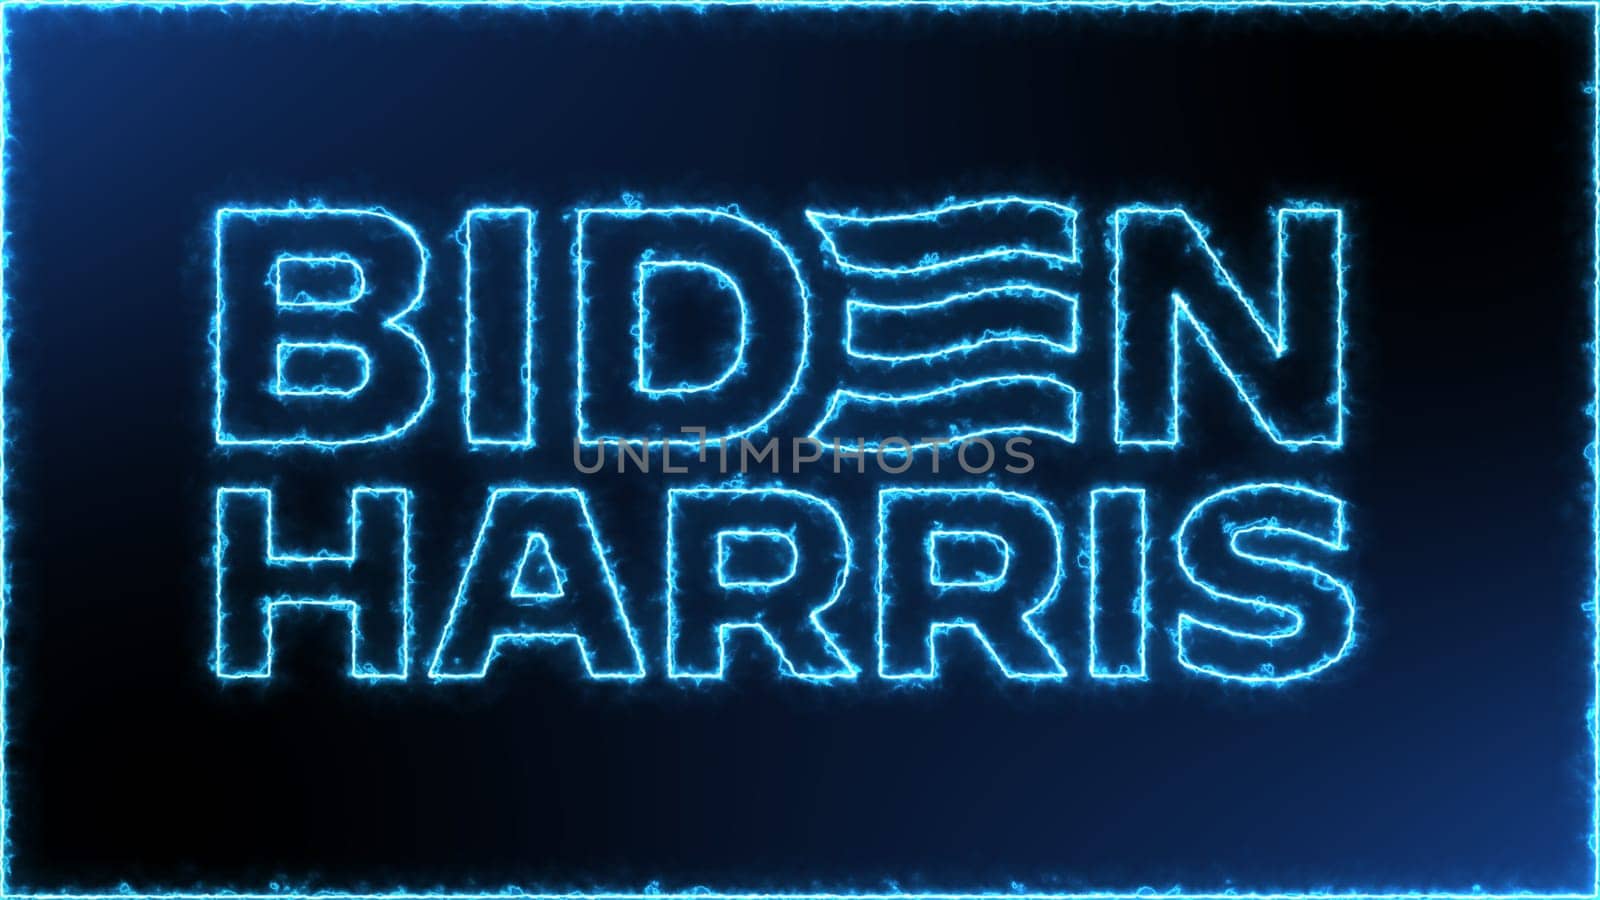 Electrify animation of Biden election in 2024 by Bonandbon